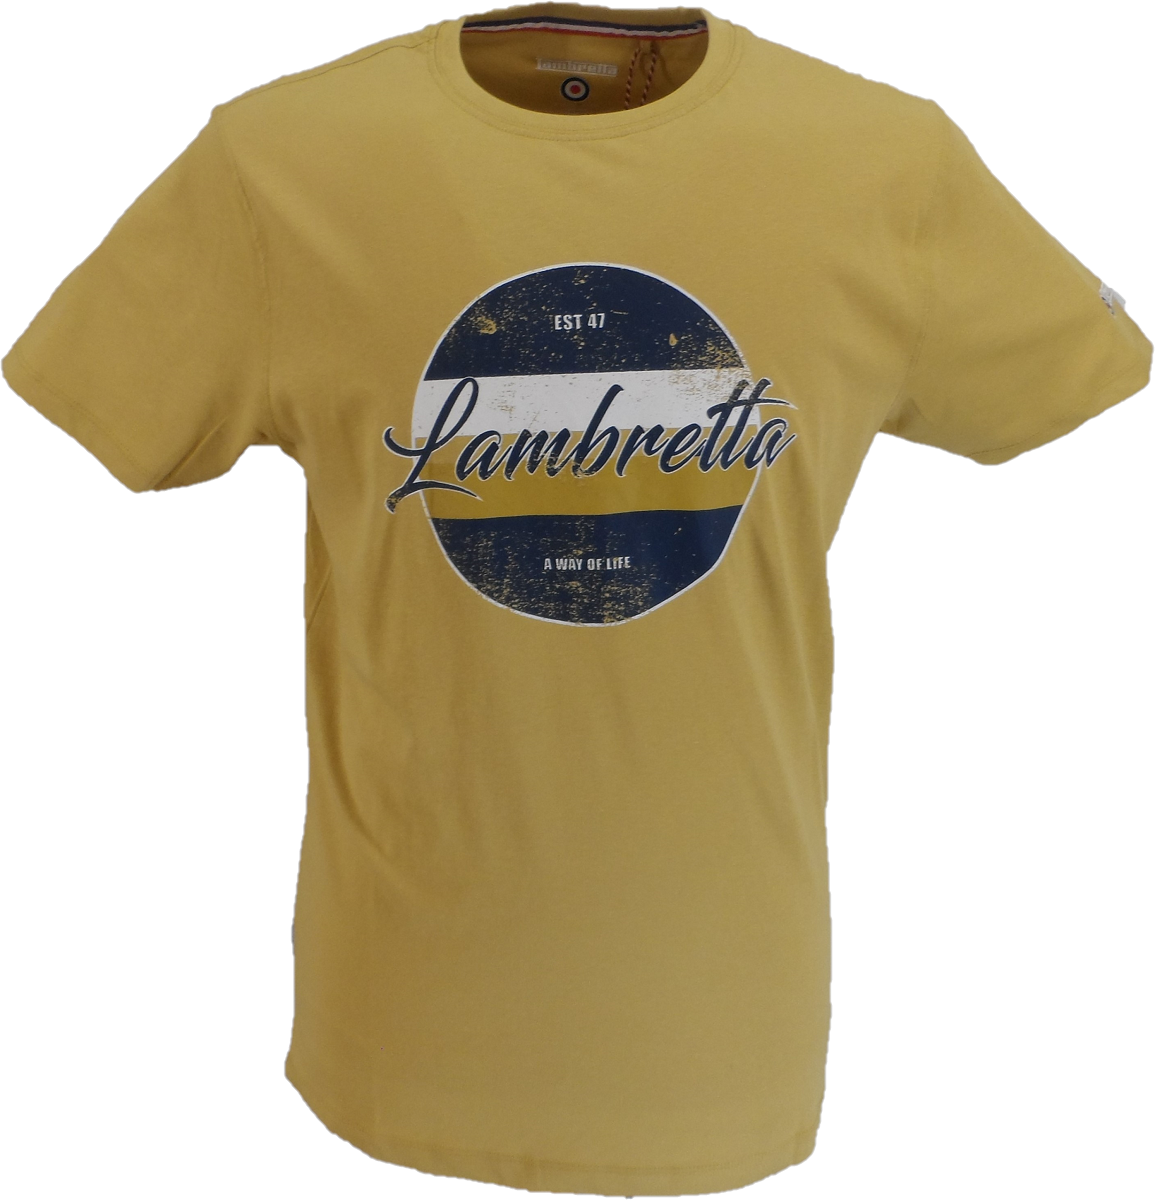 Sandbraunes T-Shirt mit Retro-Vintage-Print Lambretta